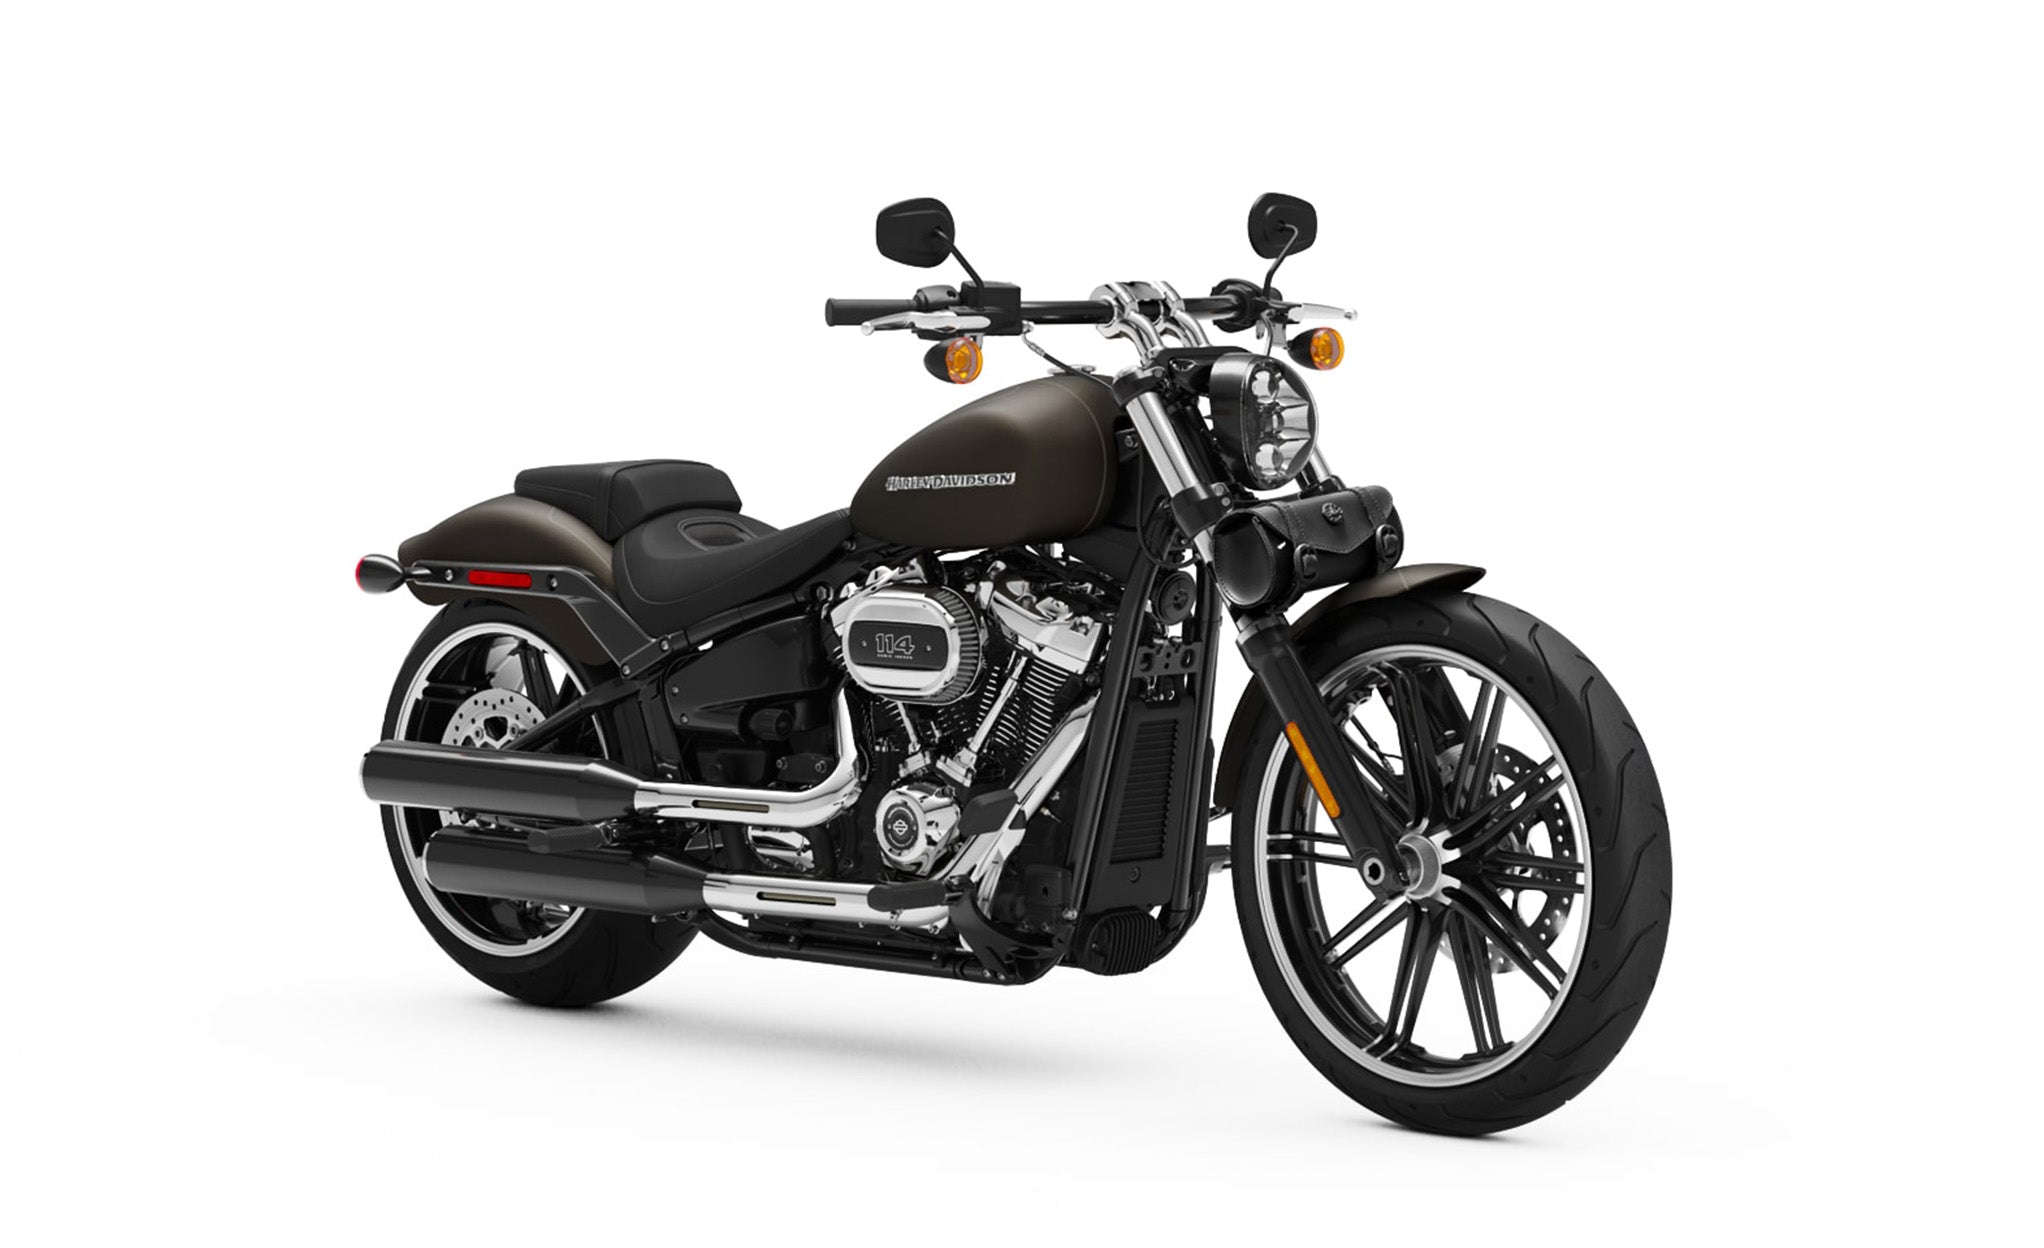 Viking Dark Age Plain Leather Motorcycle Fork Bag for Harley Davidson Bag on Bike View @expand